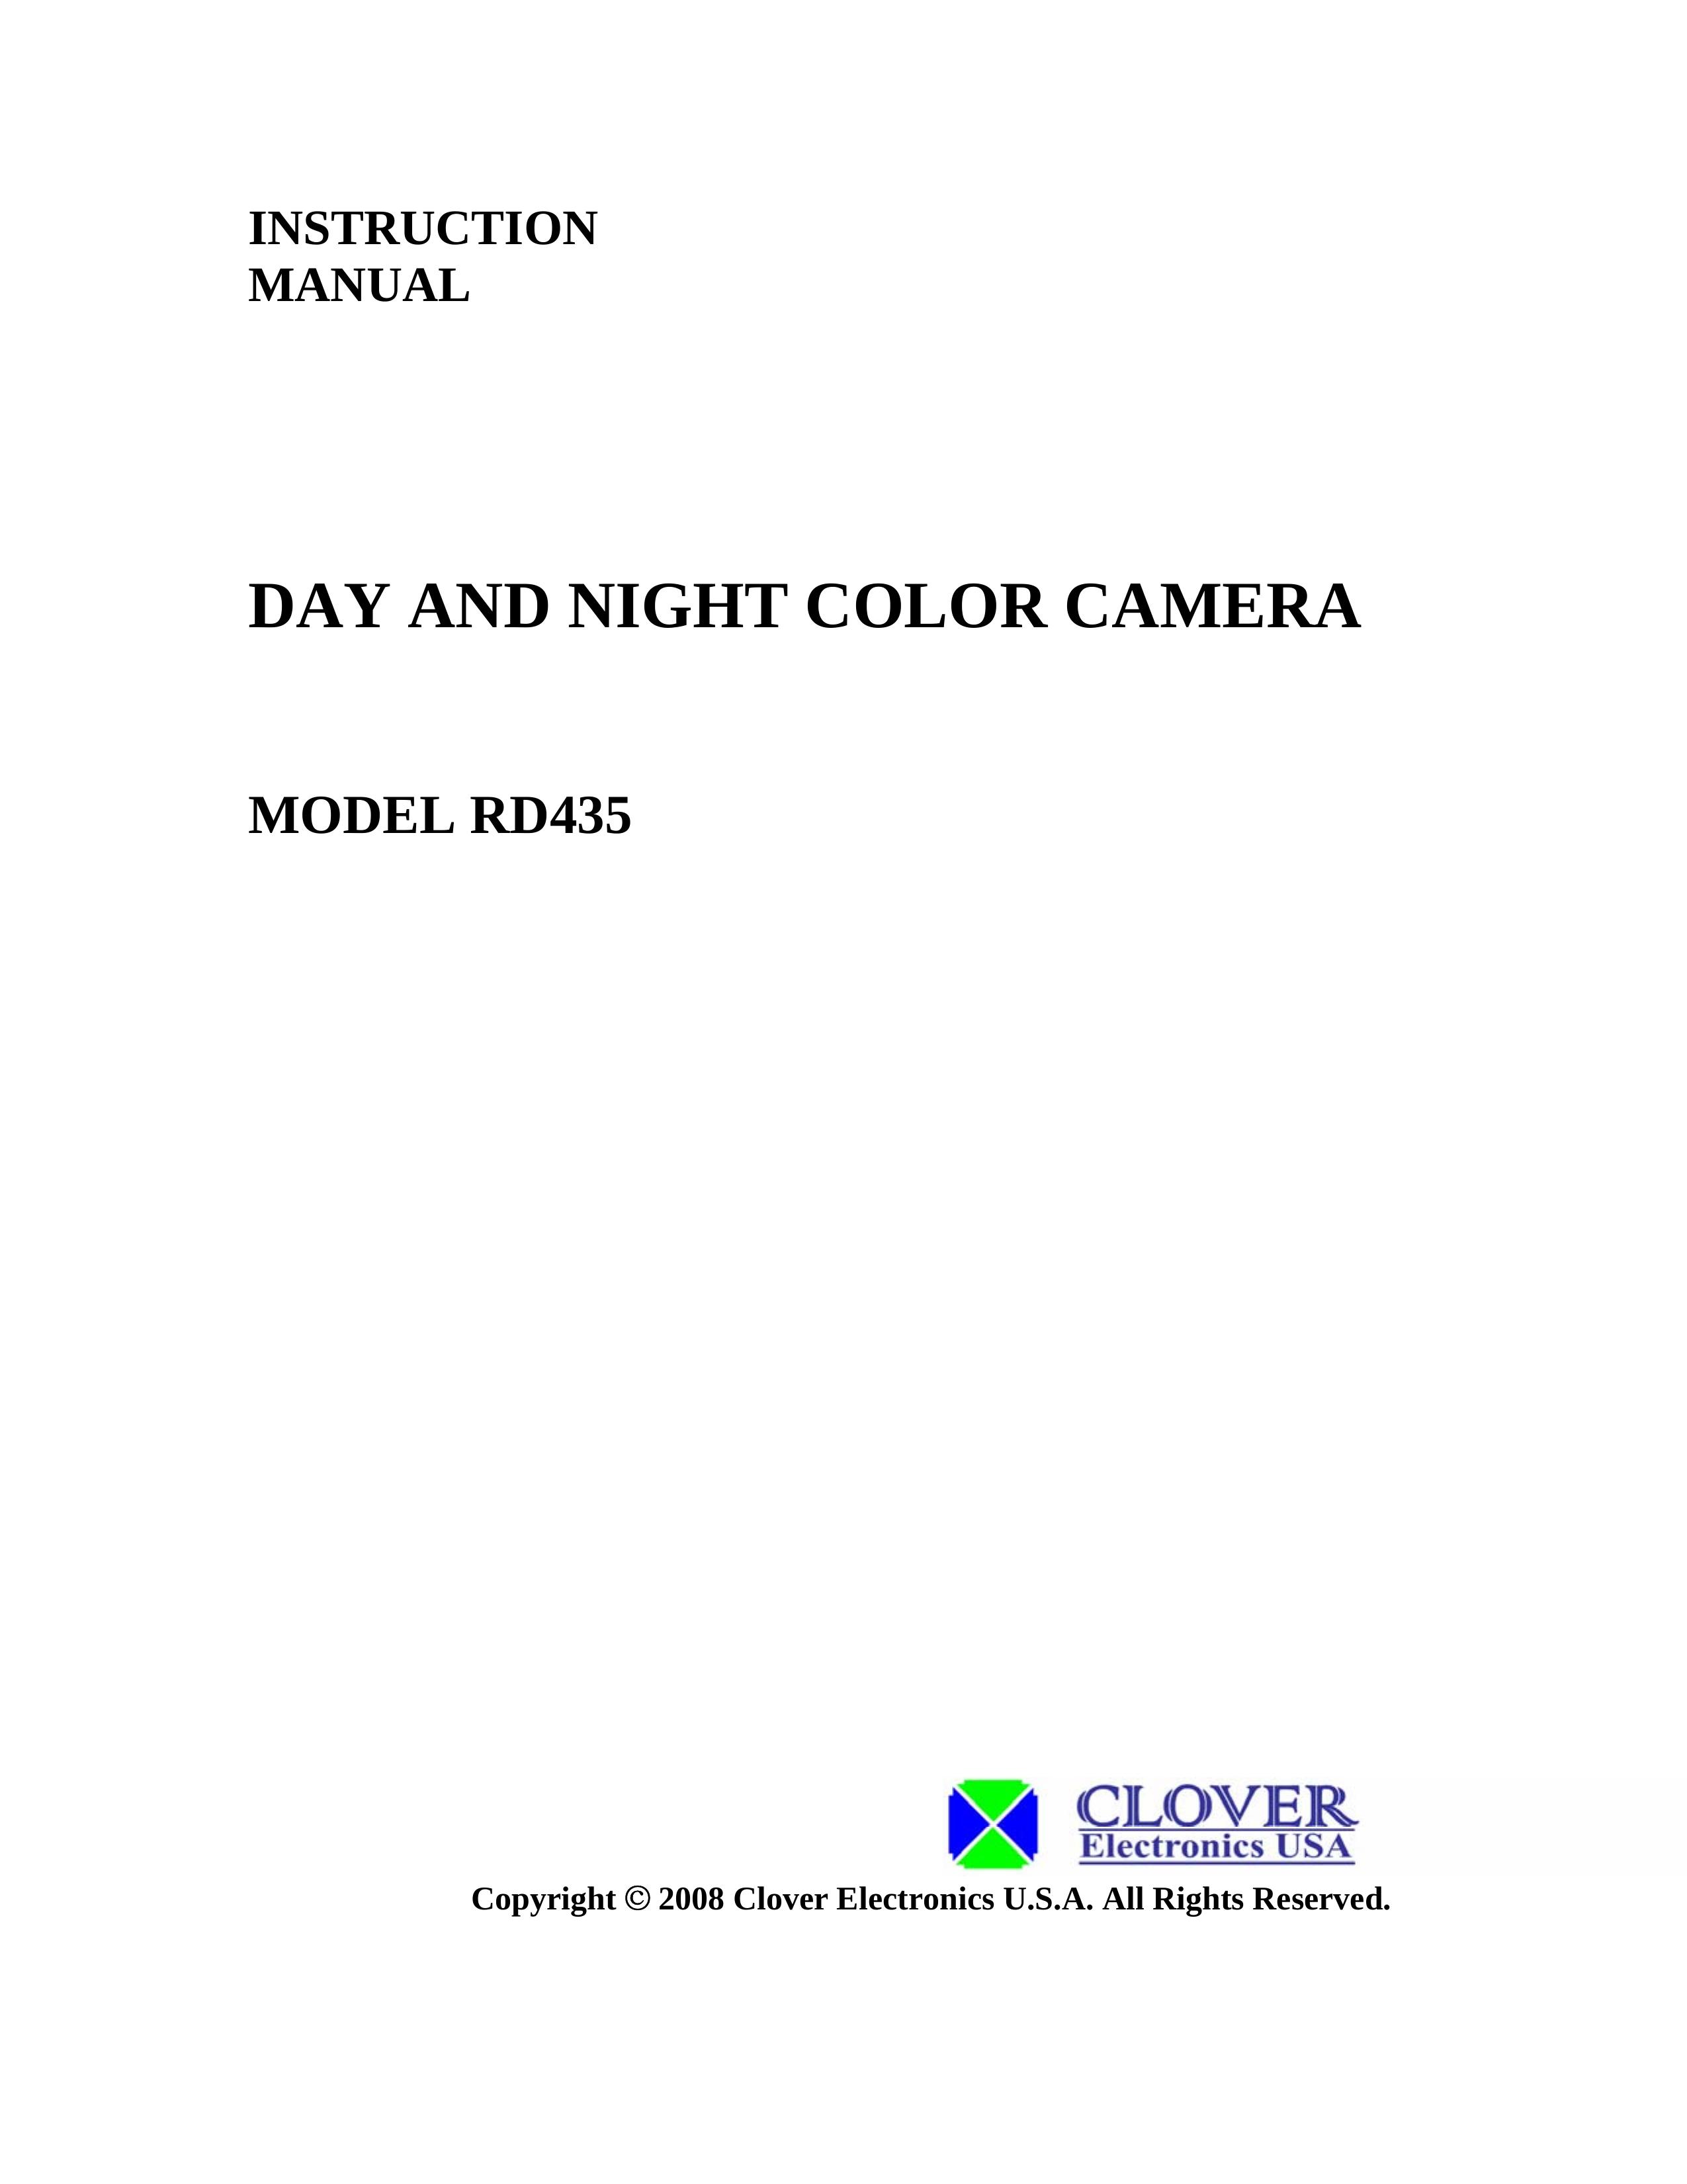 Clover Electronics RD435 Digital Camera User Manual